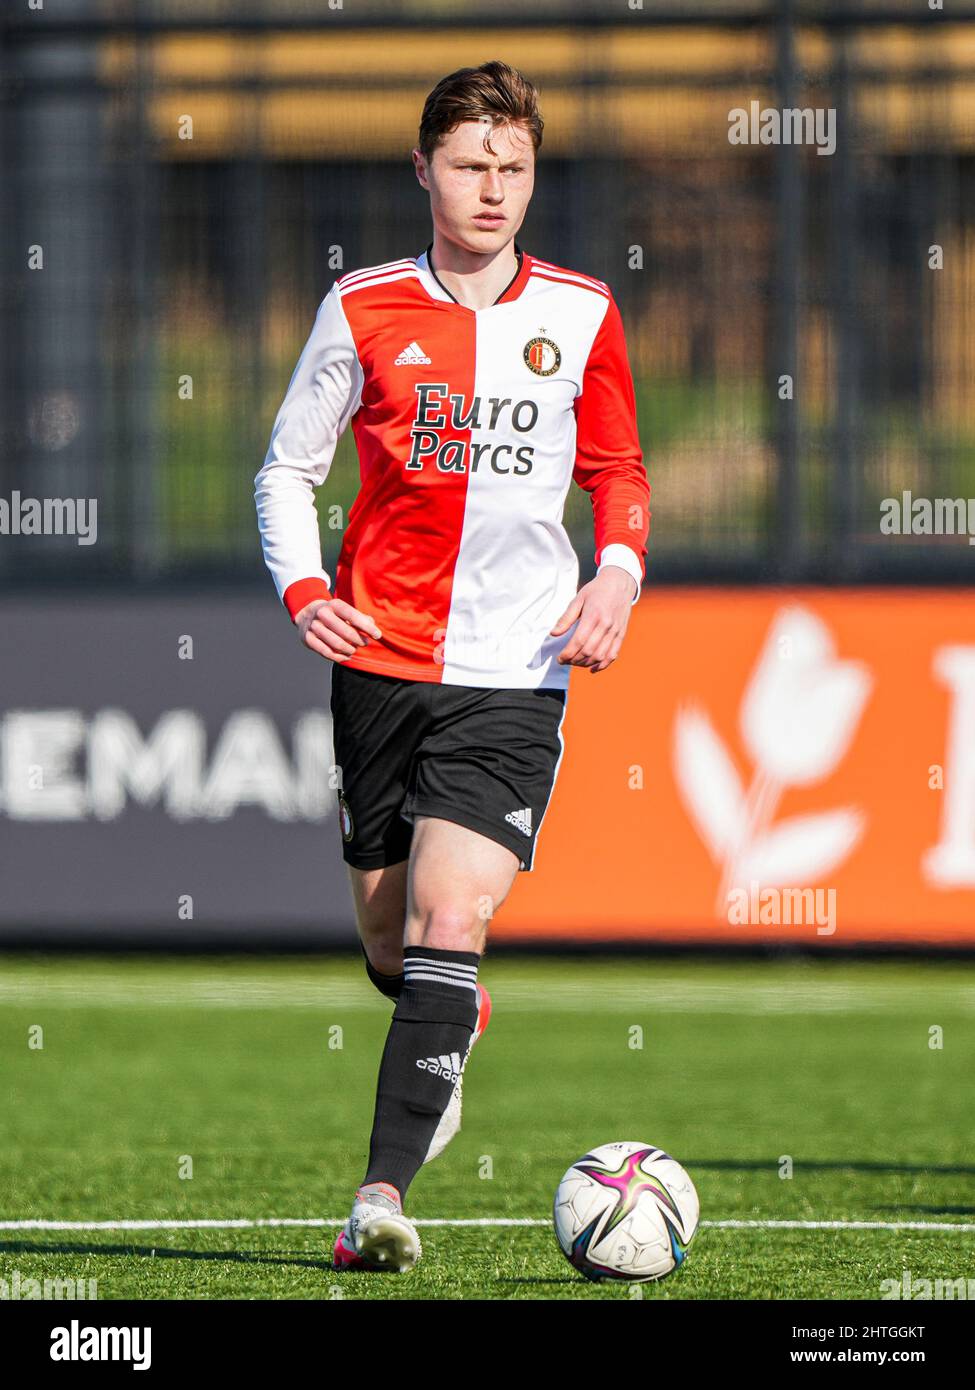 Rotterdam - Milan Hokke de Feyenoord O18 pendant le match entre Feyenoord O18 et SC Heerenveen O18 à Nieuw Varkenoord le 26 février 2022 à Rotte Banque D'Images